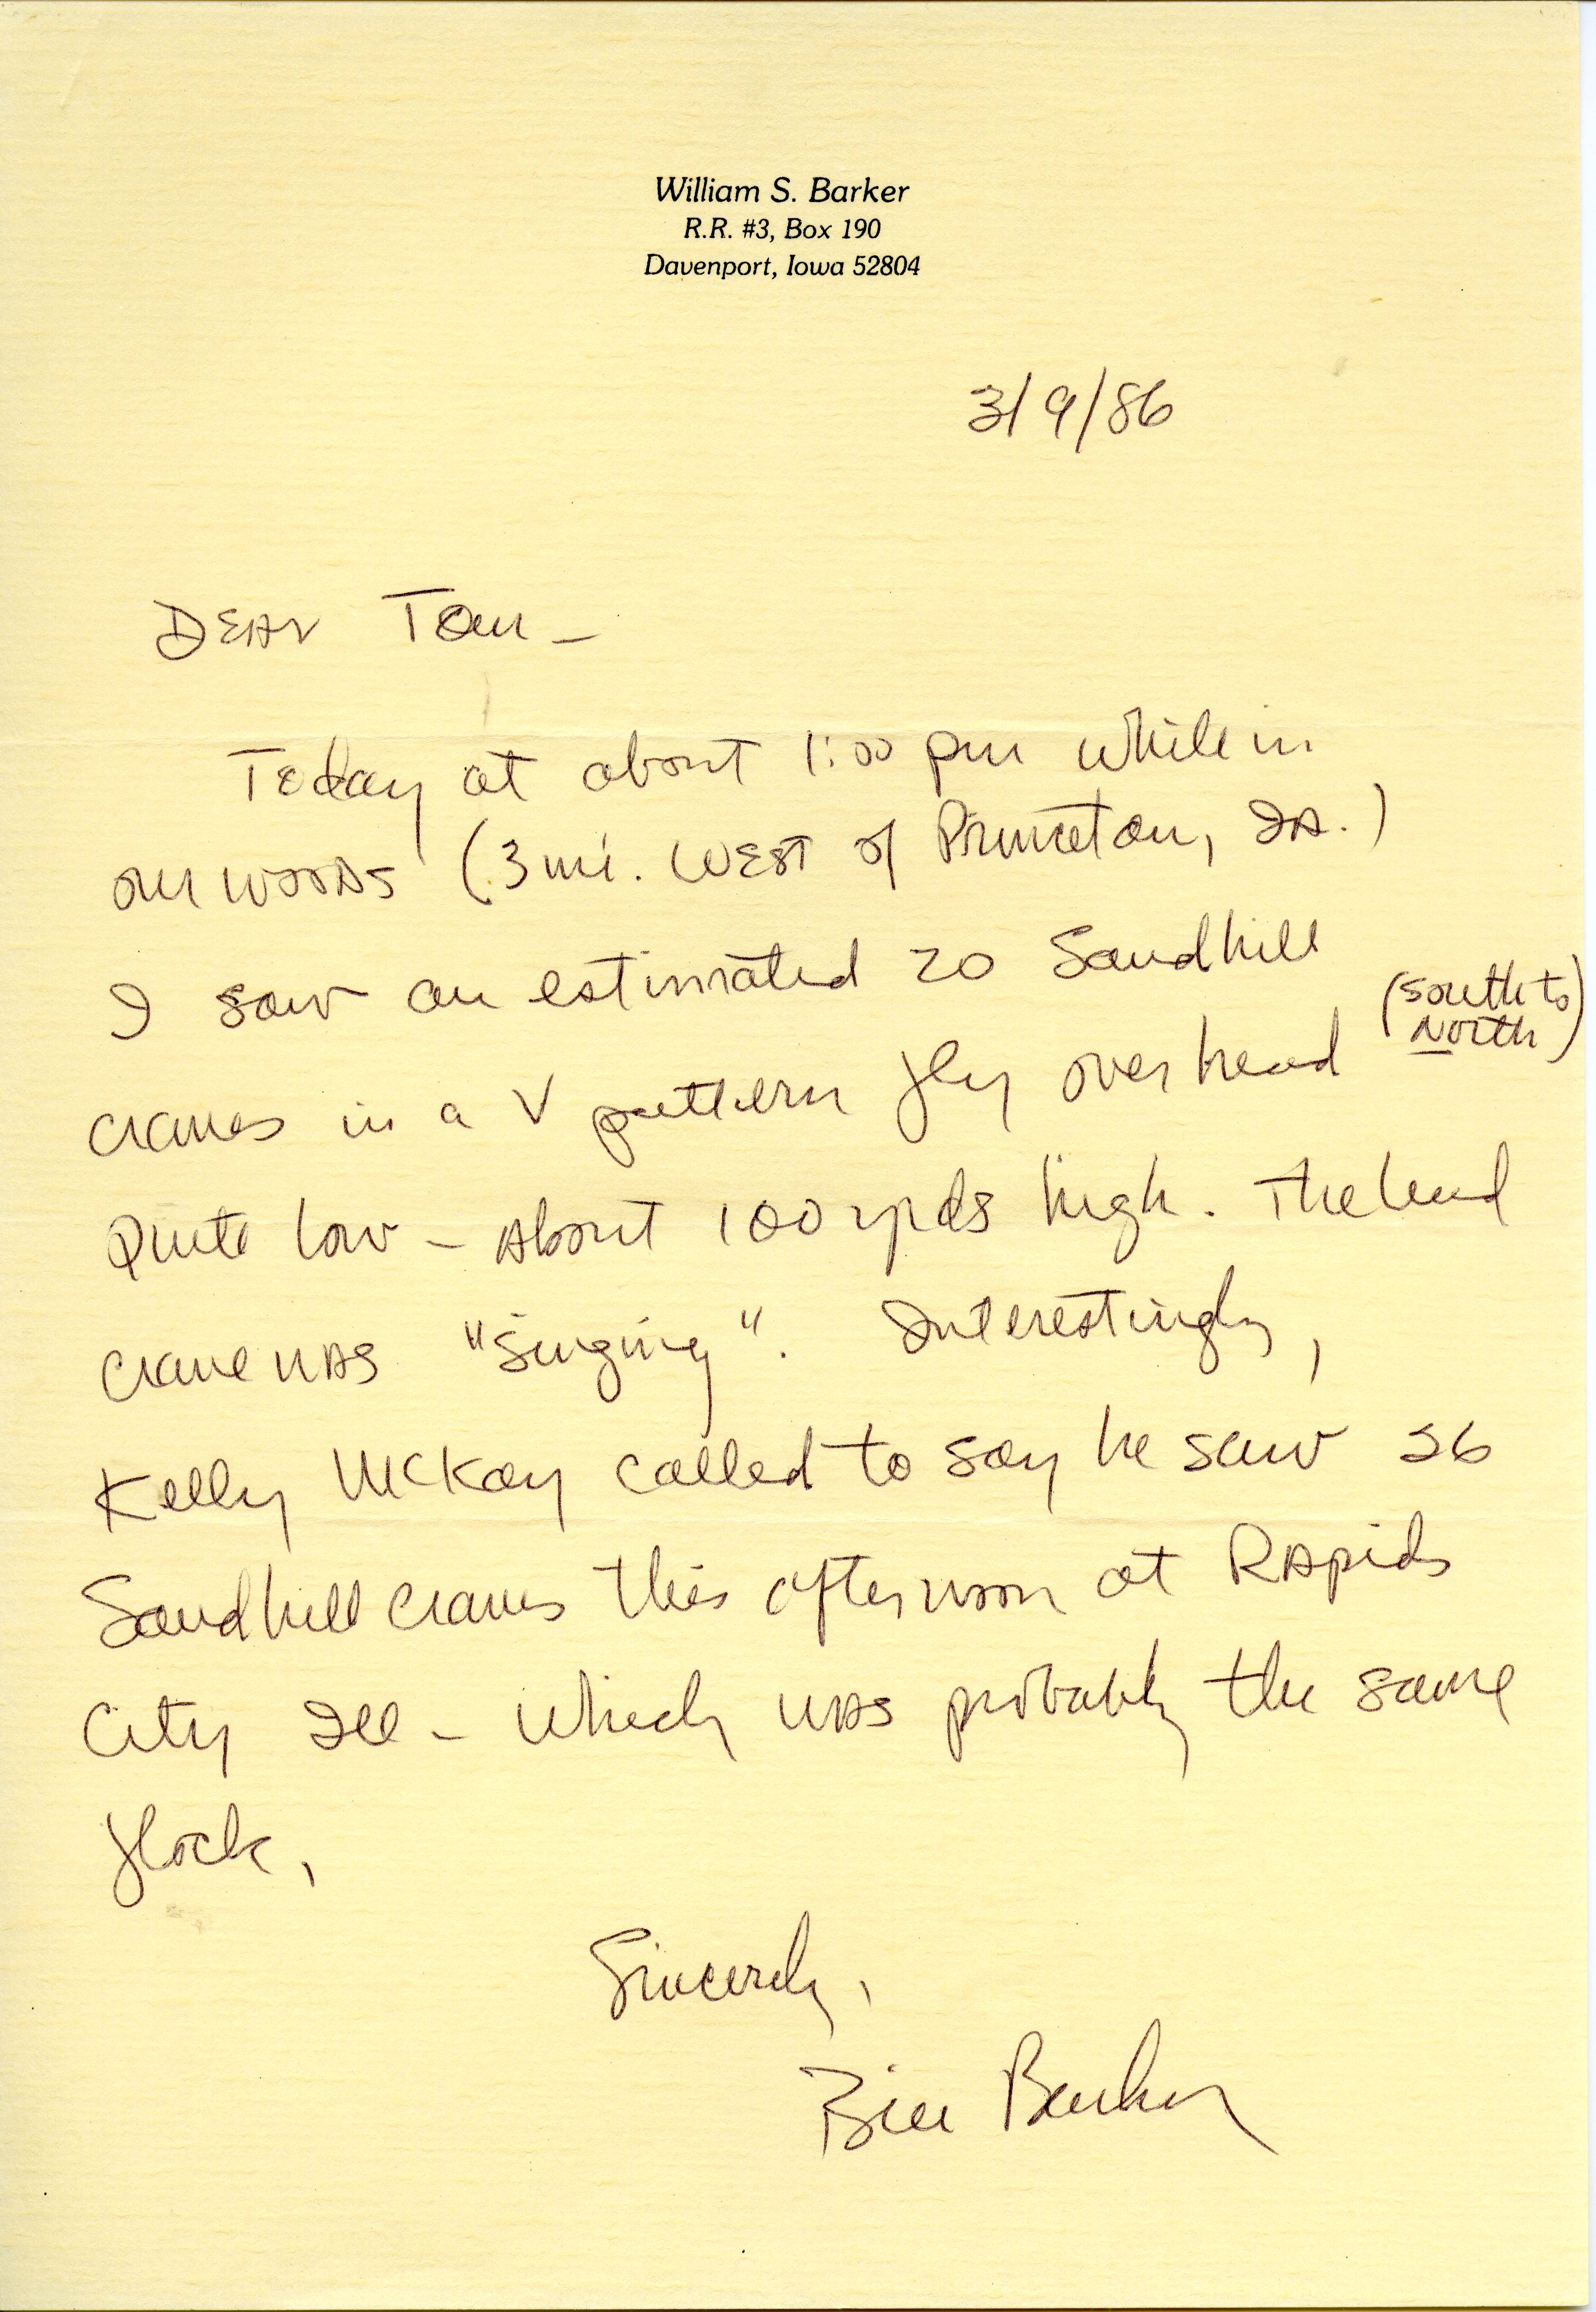 William Barker letter to Thomas Kent regarding Sandhill Crane flyby, March 9, 1986